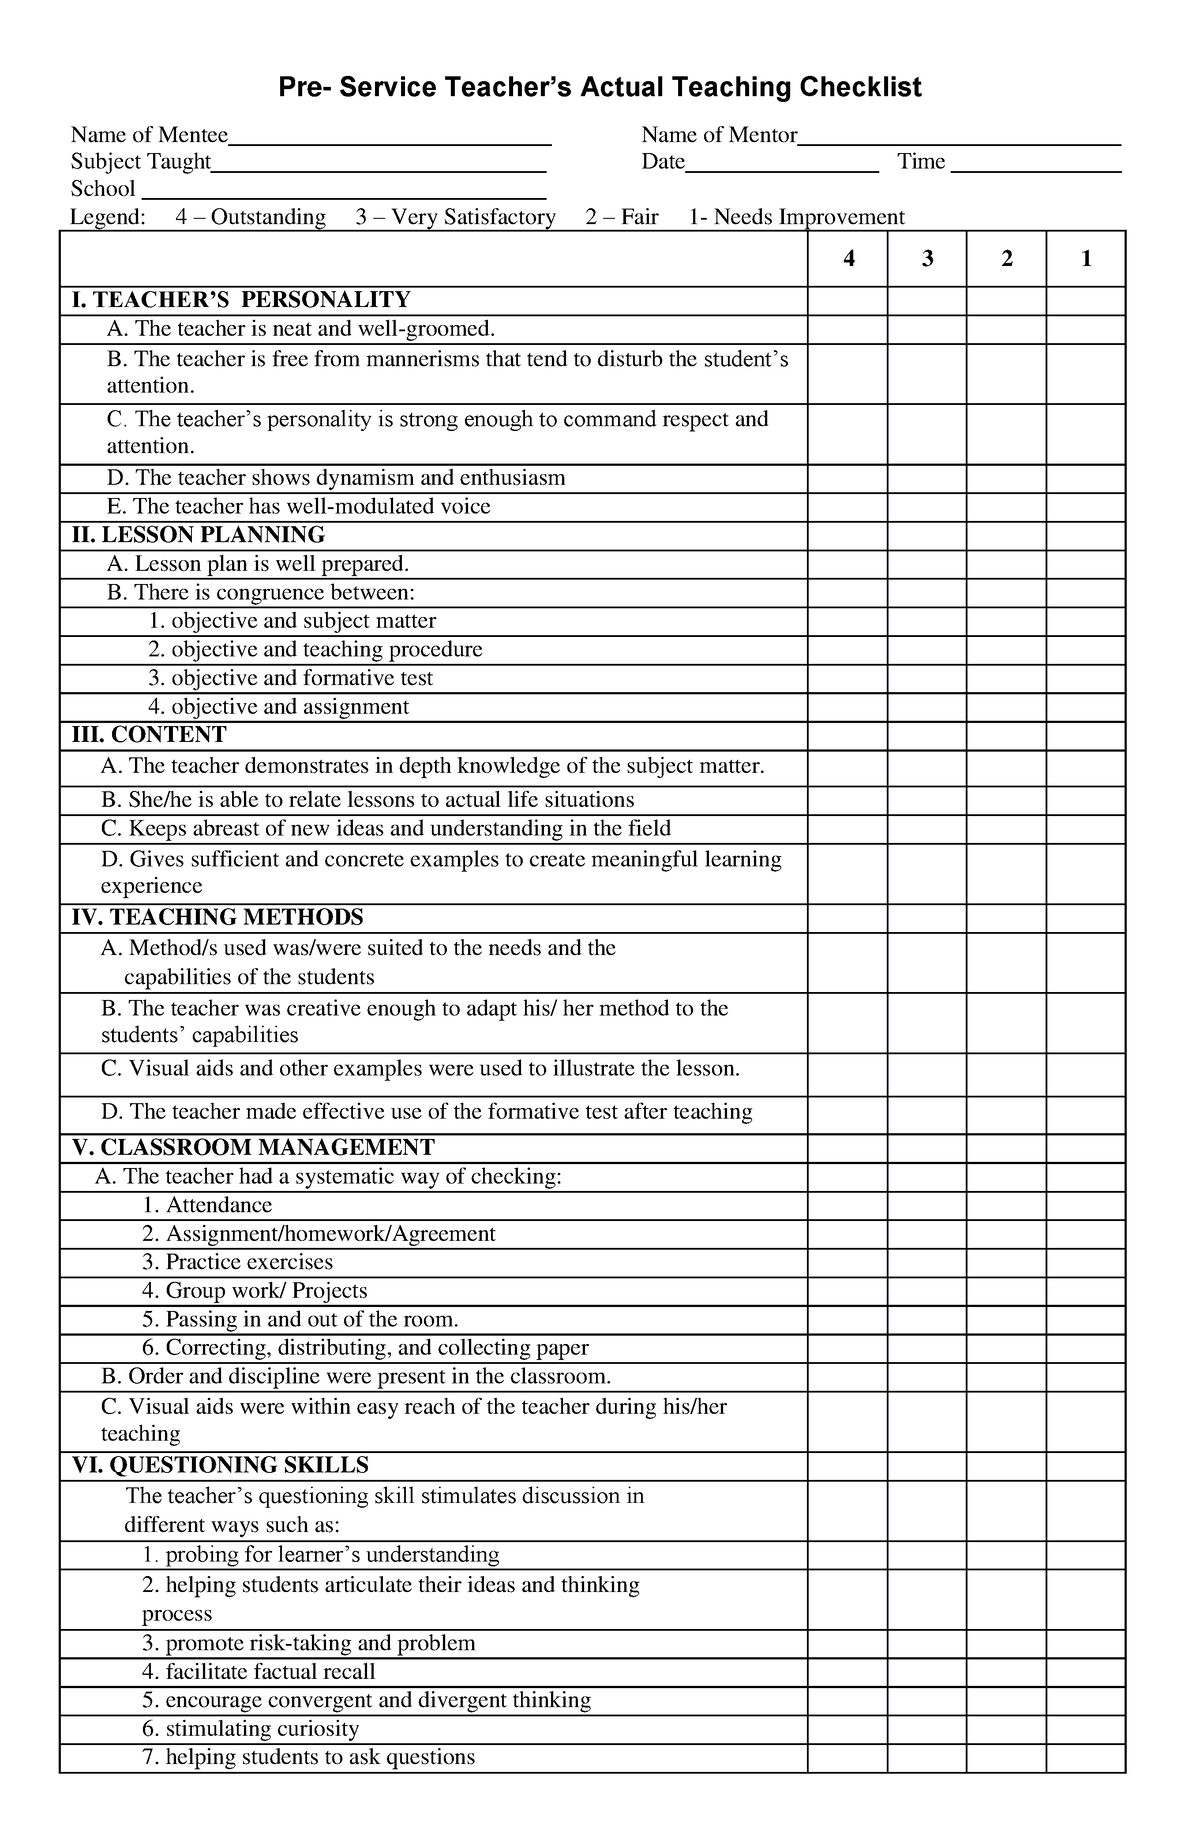 Pre service teacher actual teaching checklist Final - Pre- Service ...